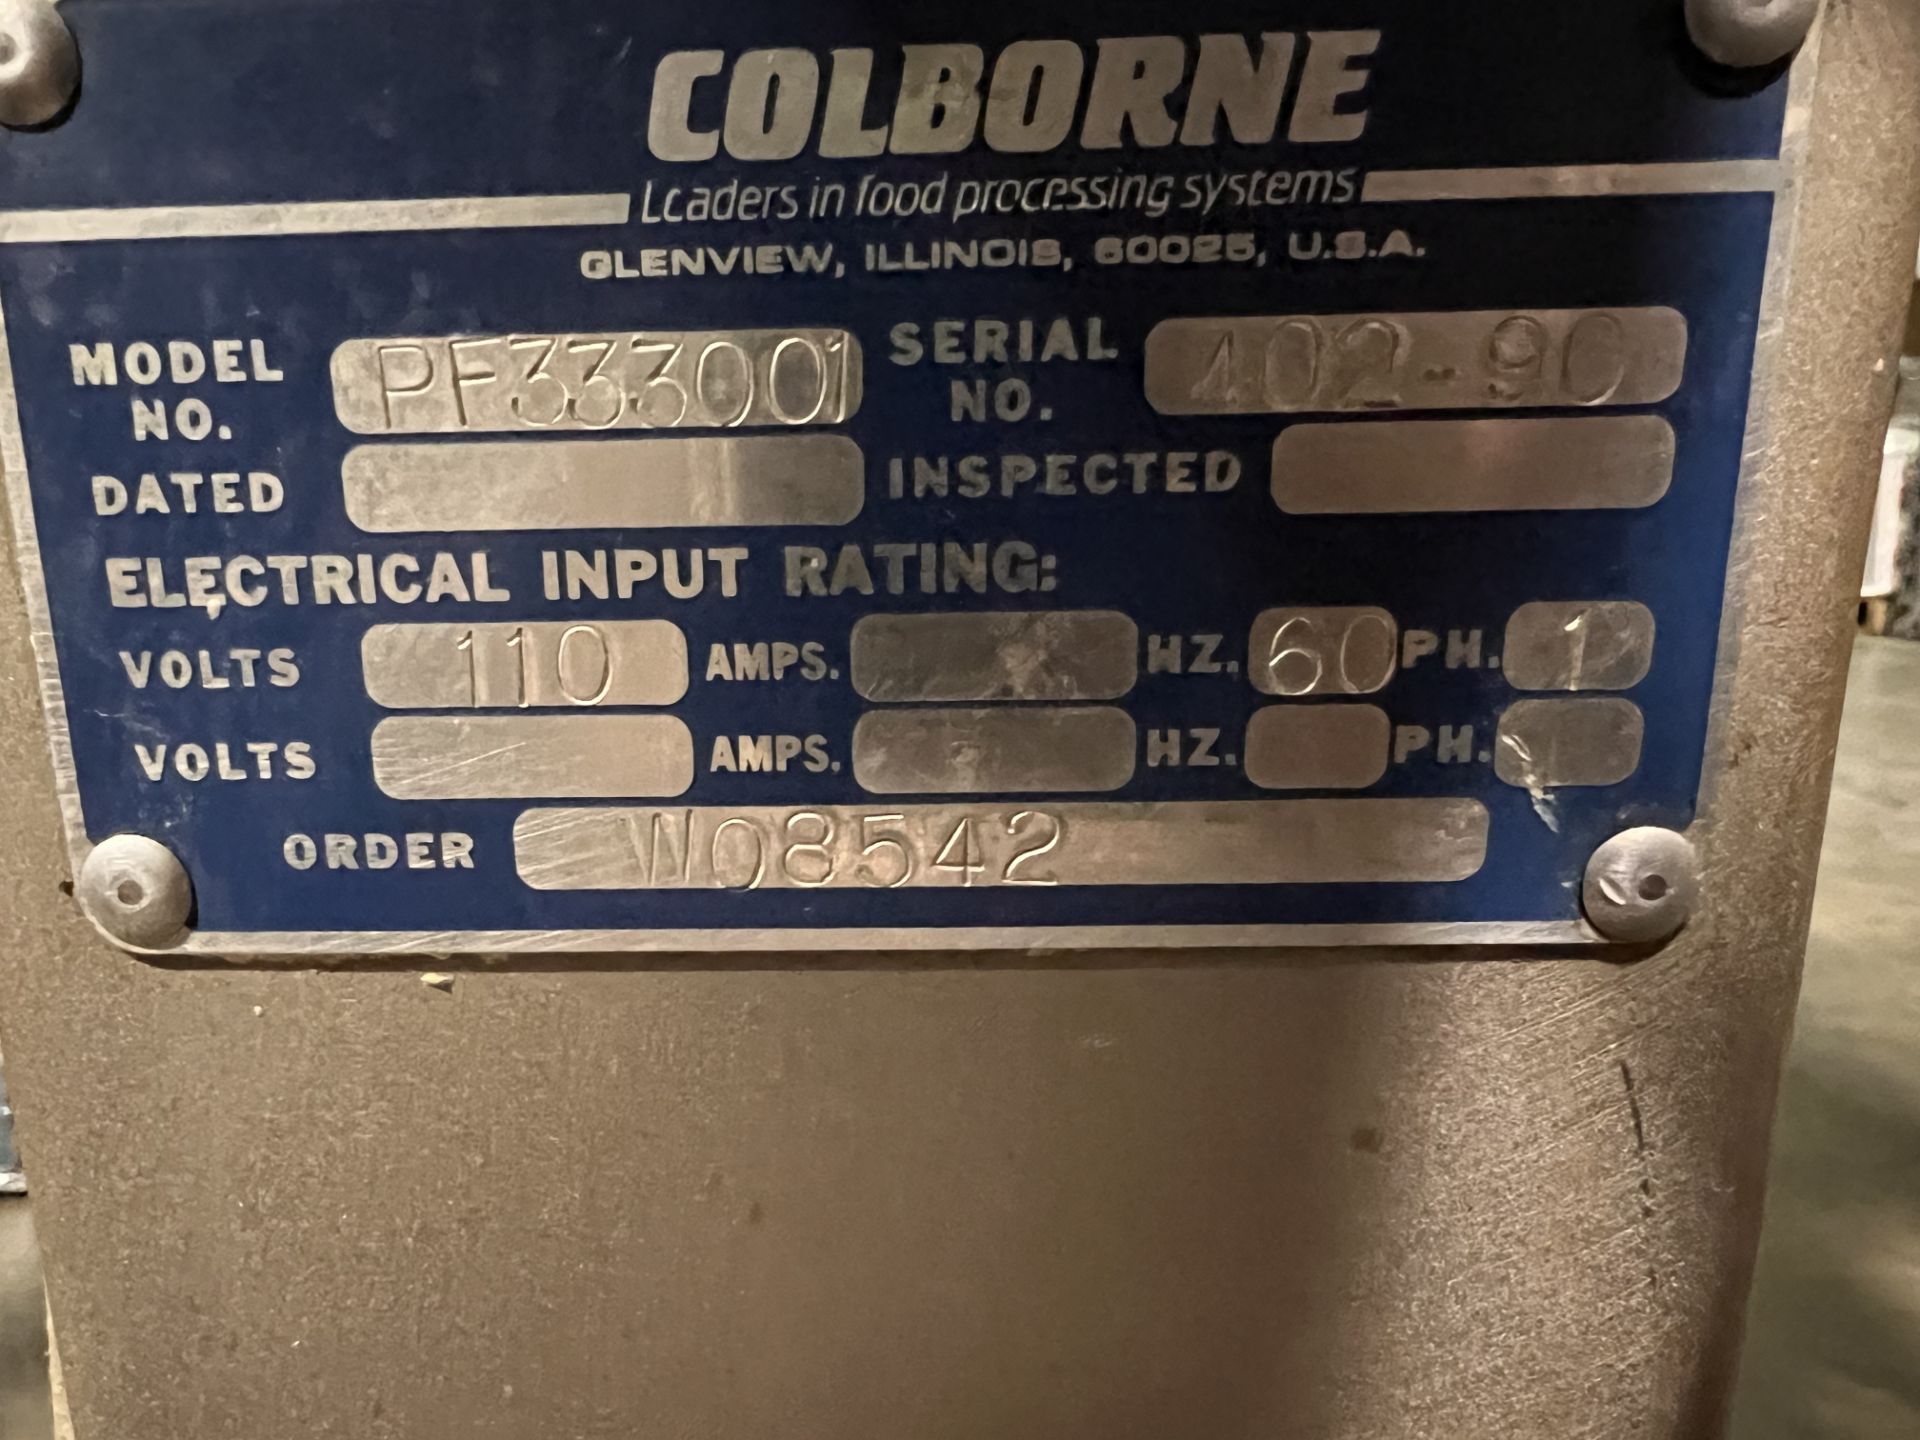 COLBORNE S/S PORTABLE DEPOSITOR, MODEL PF333001, S/N 402-90, 110 V - Image 6 of 12